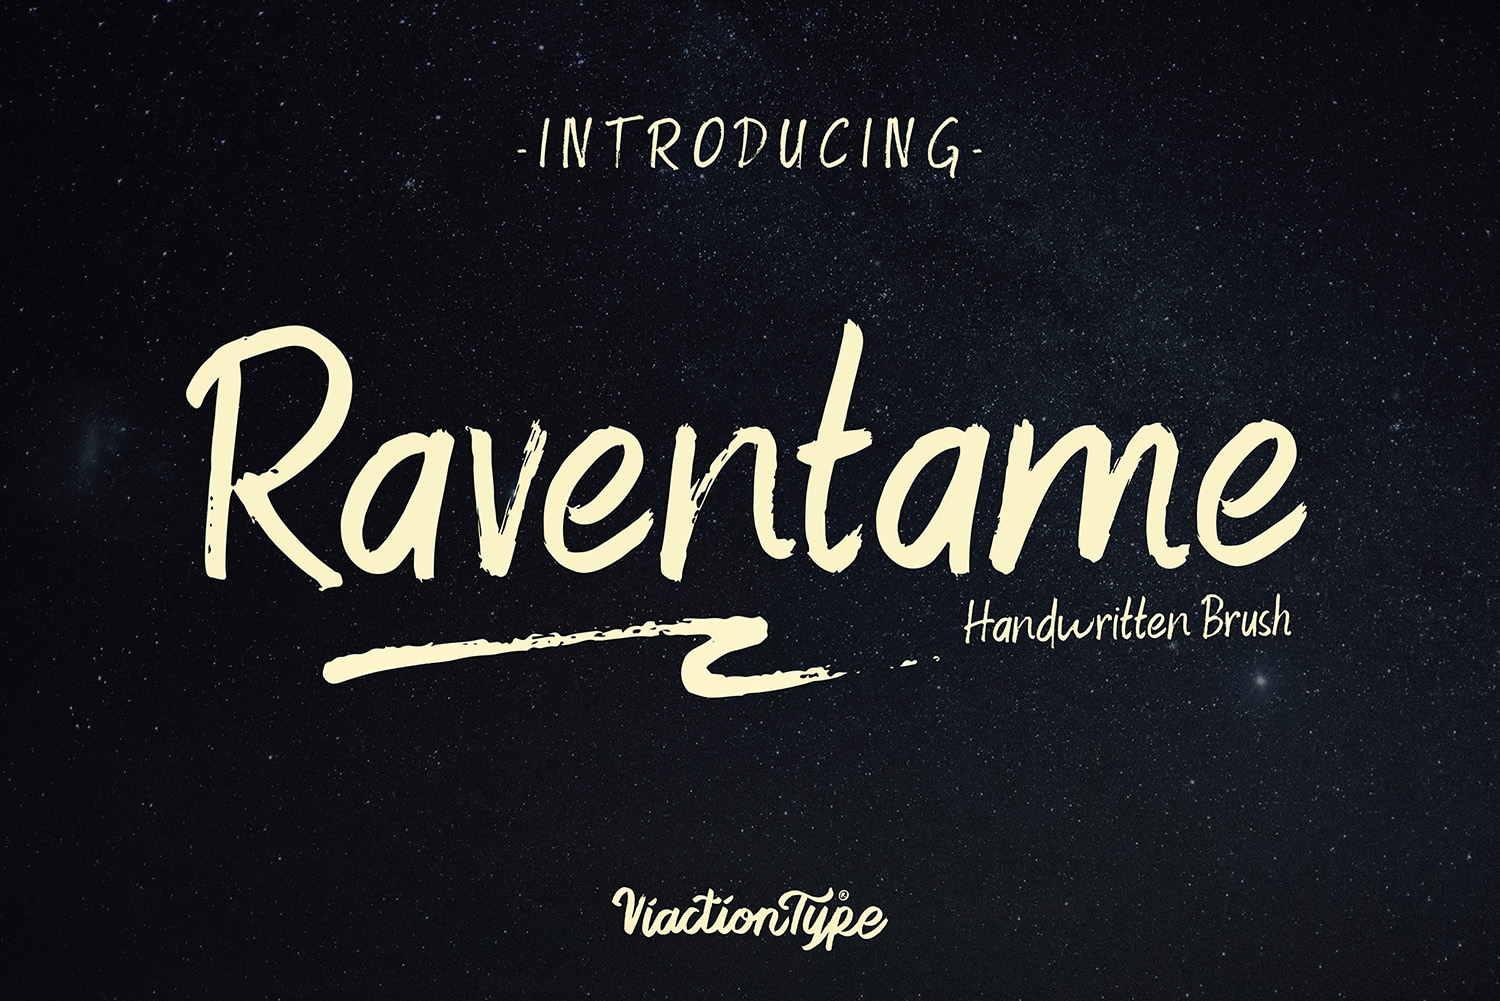 Raventame Free Font